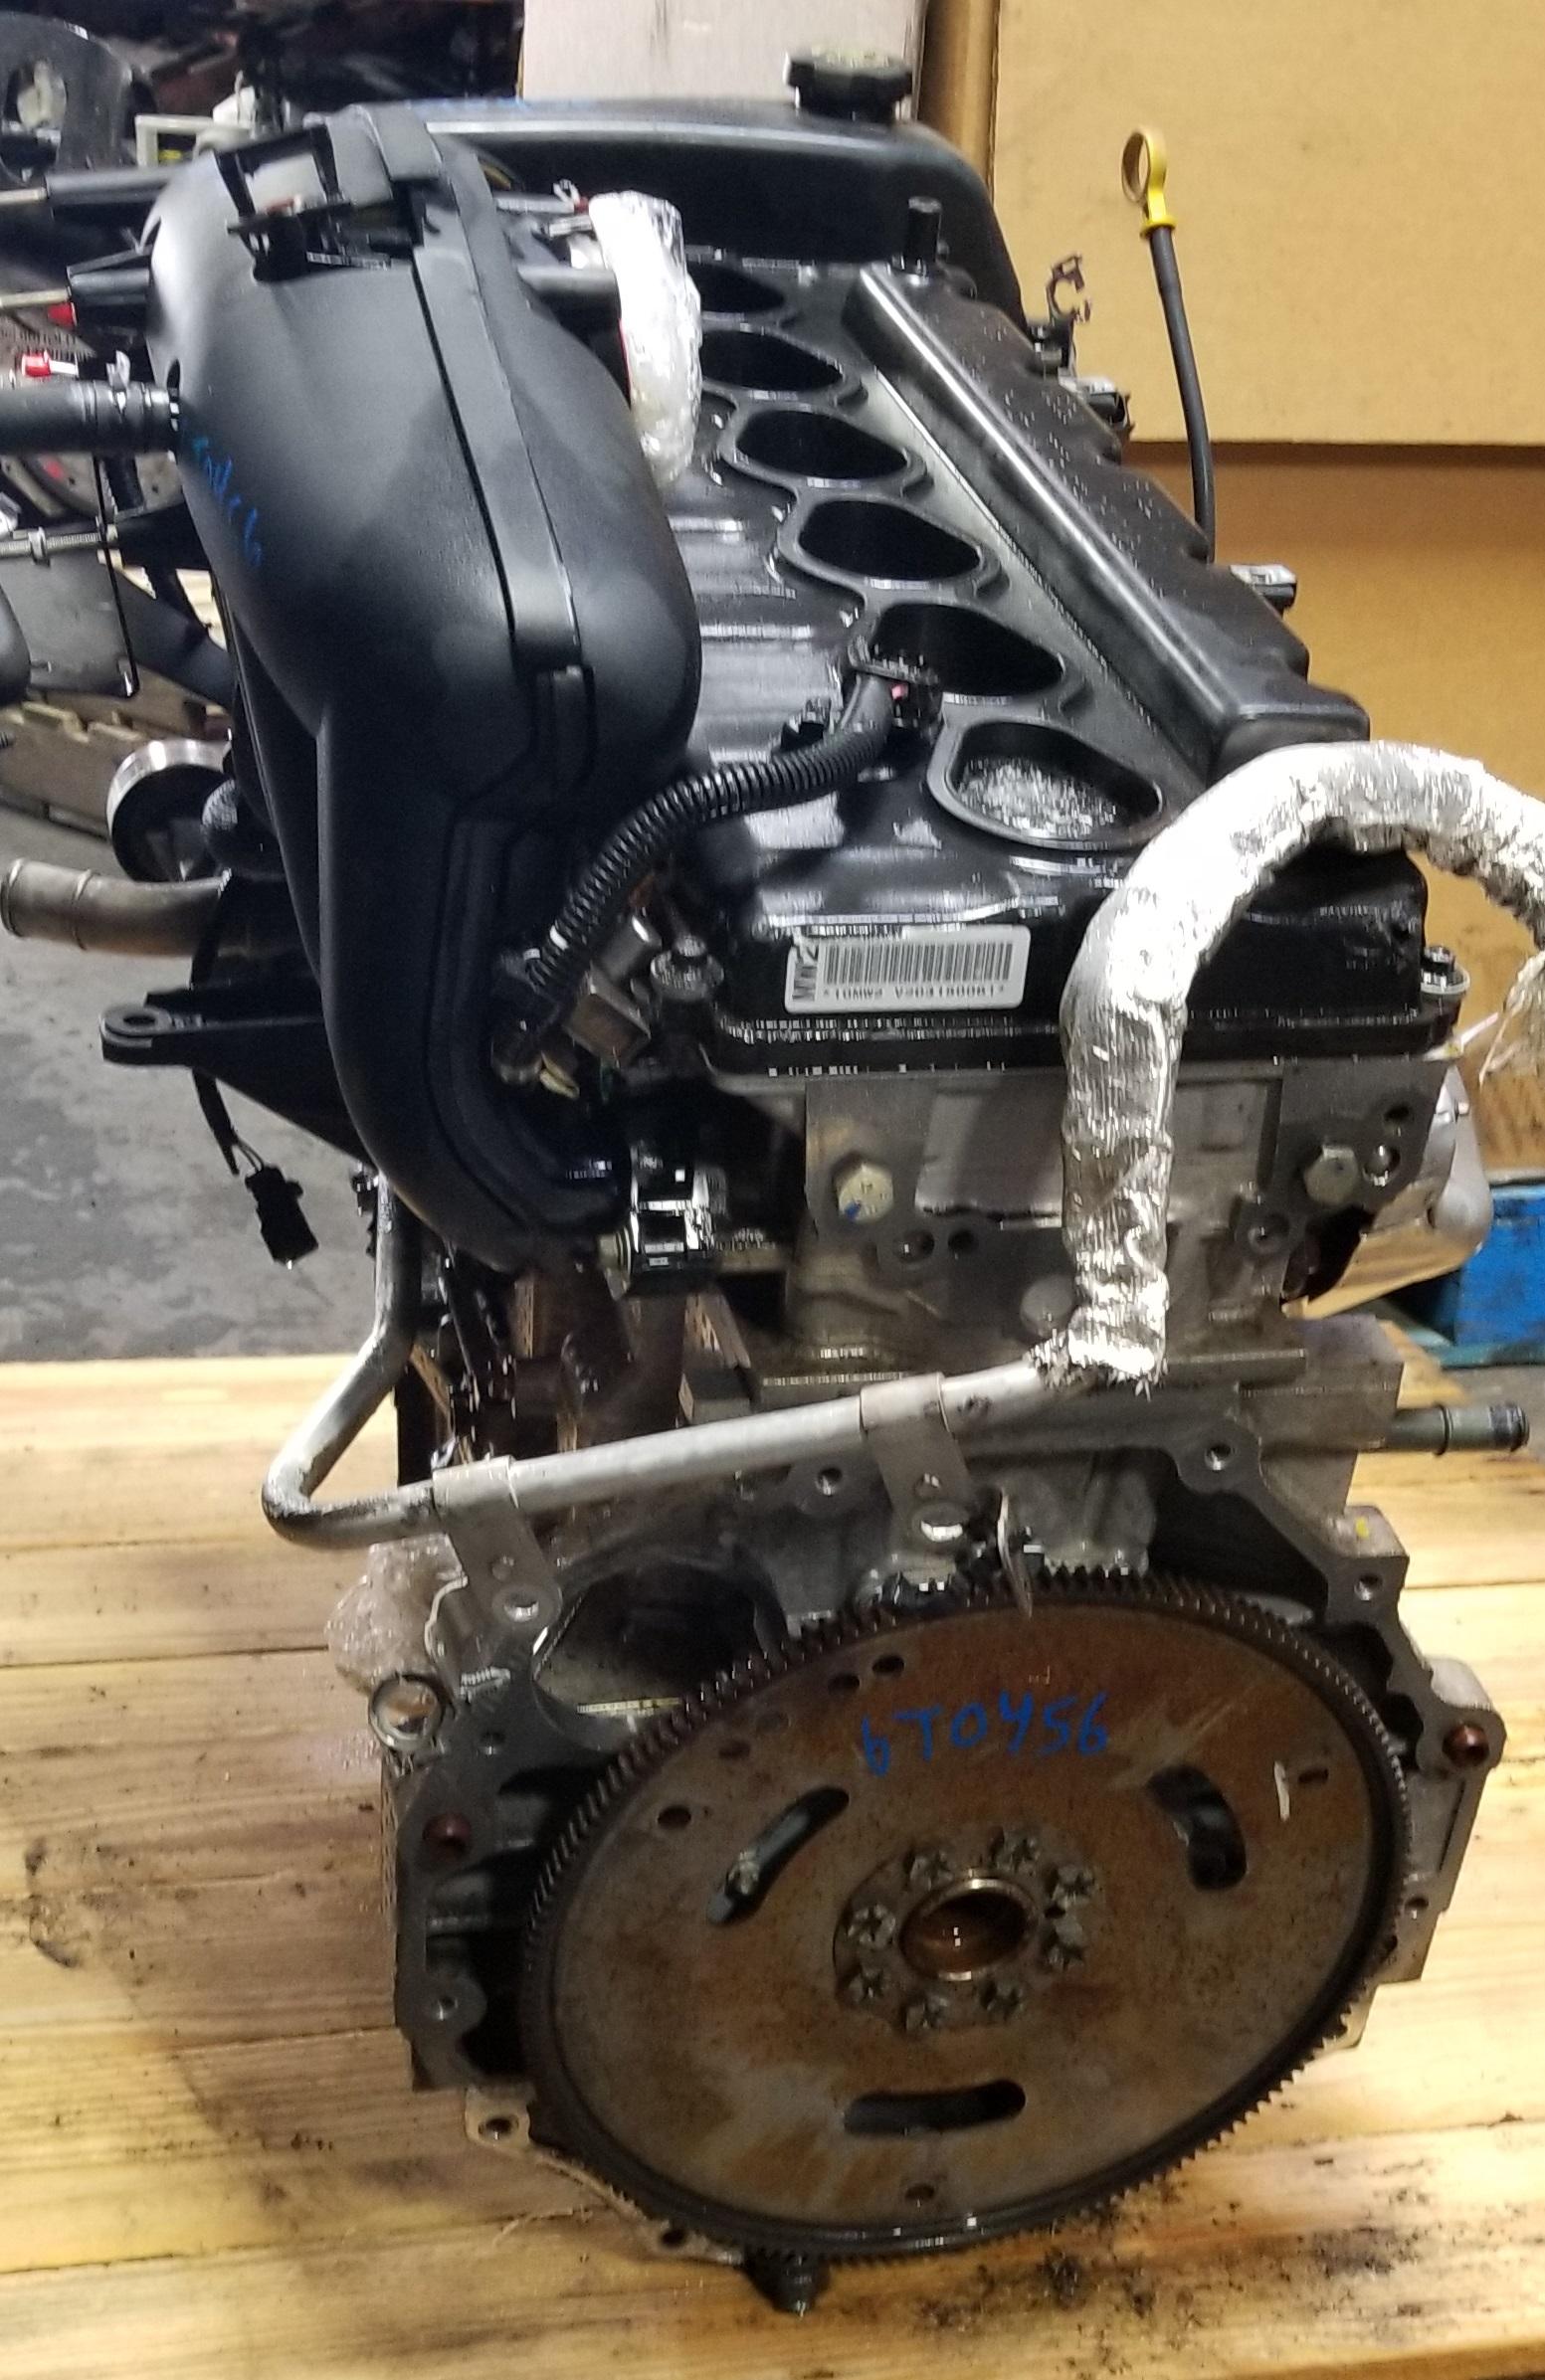 Chevy Trailblazer Engine 02 2.7.19